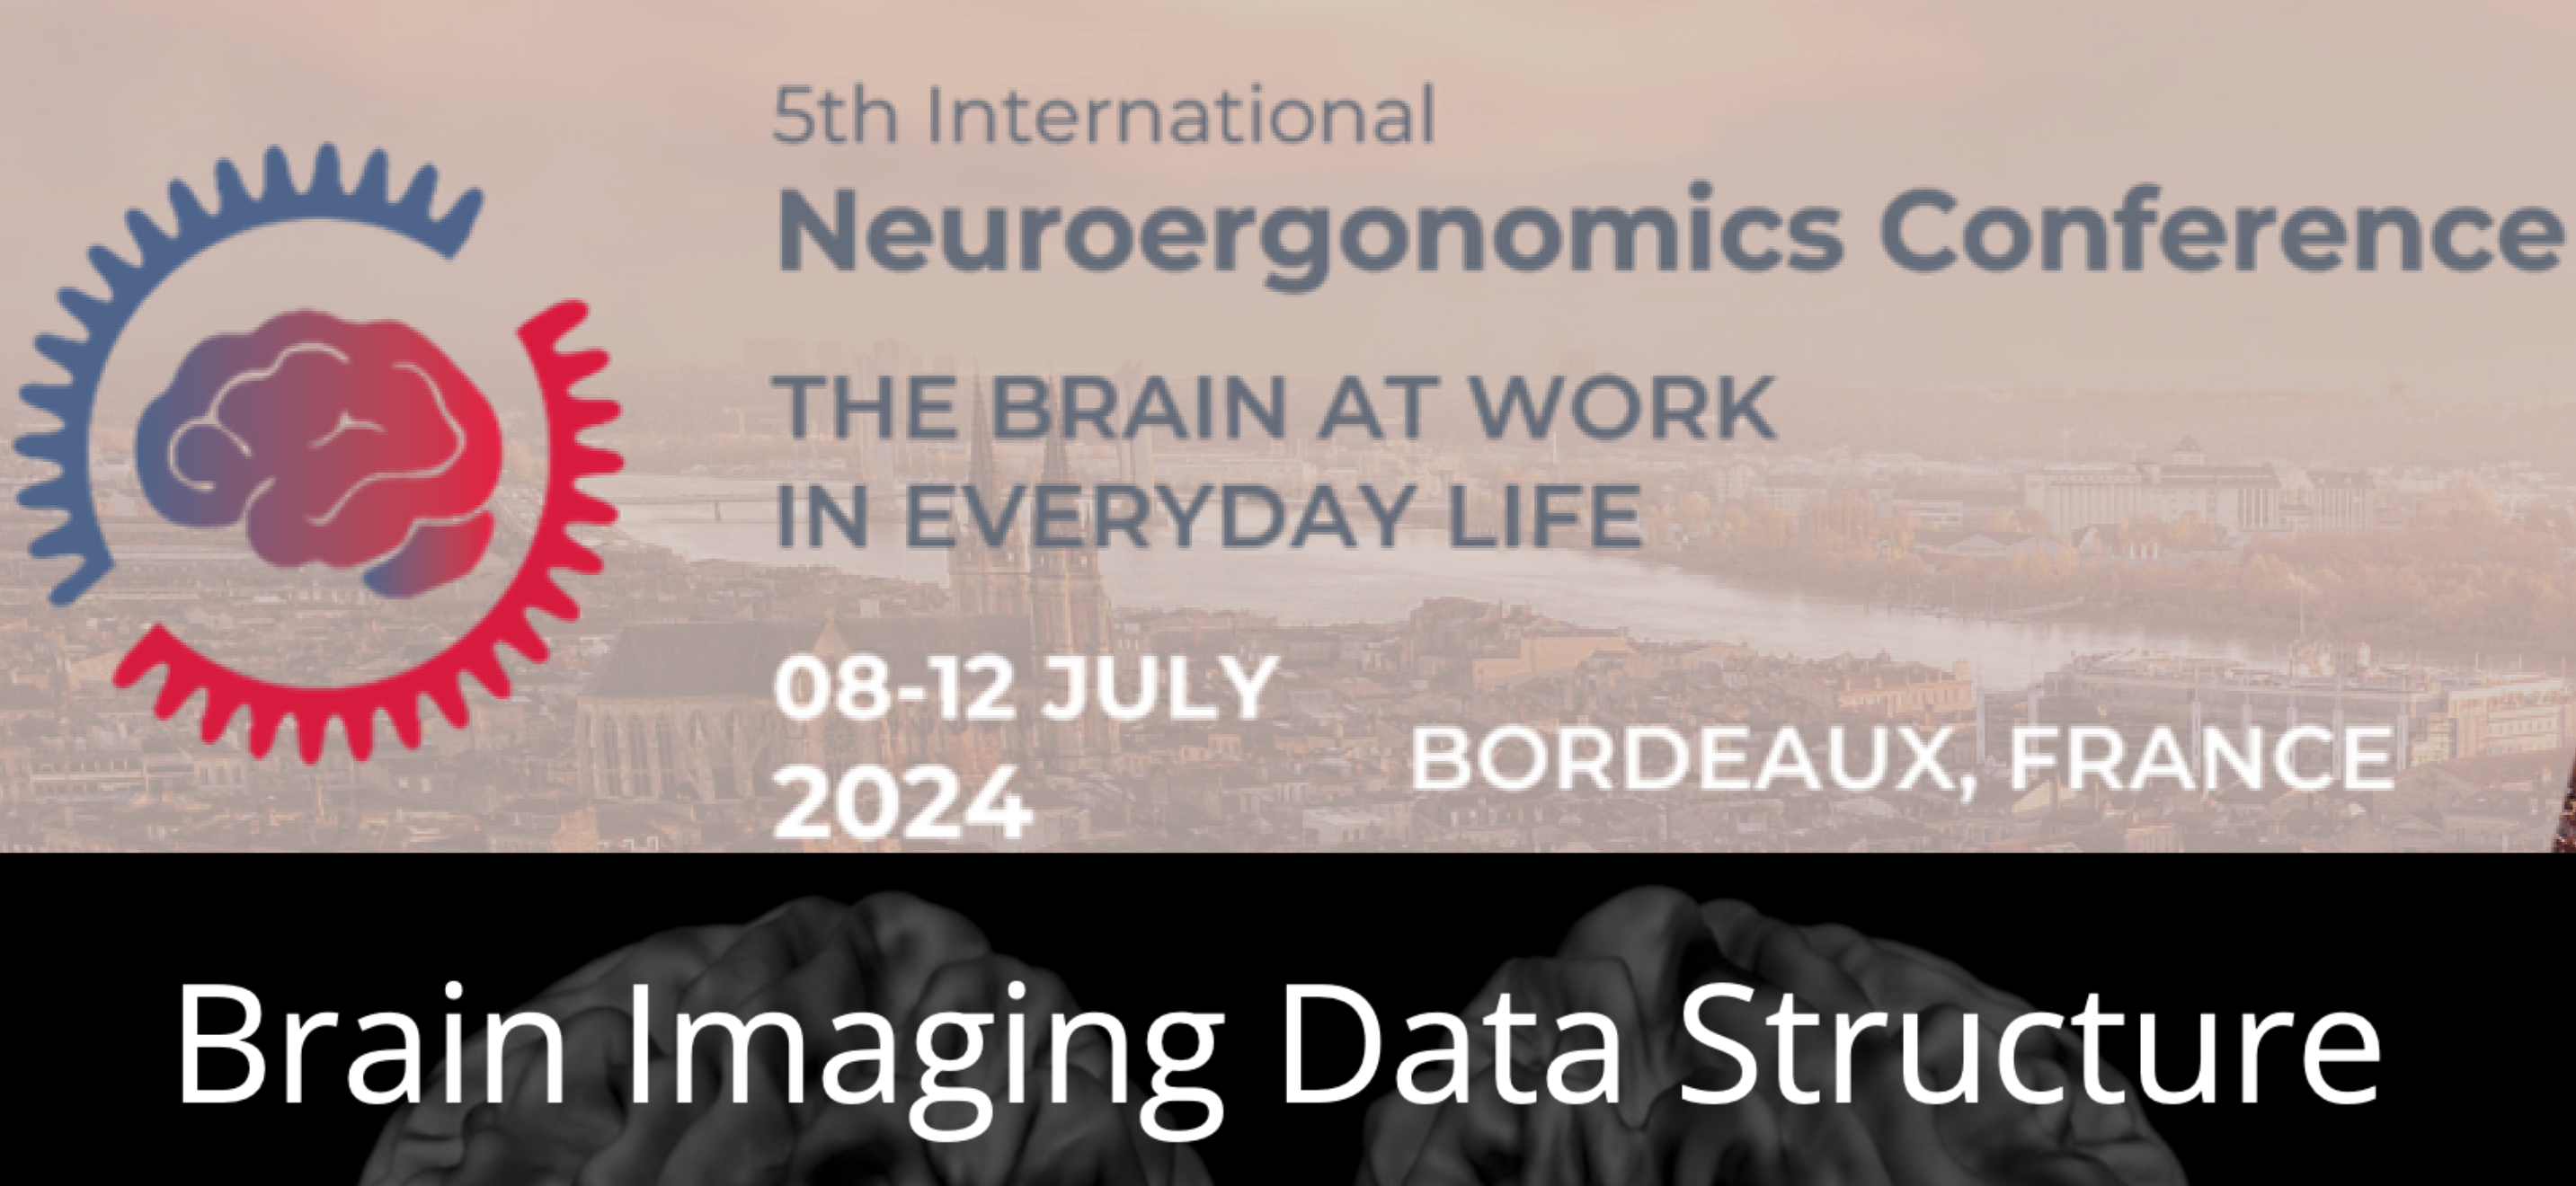 Teaser for the BIDS Workshop at Neuroergonomics 2024